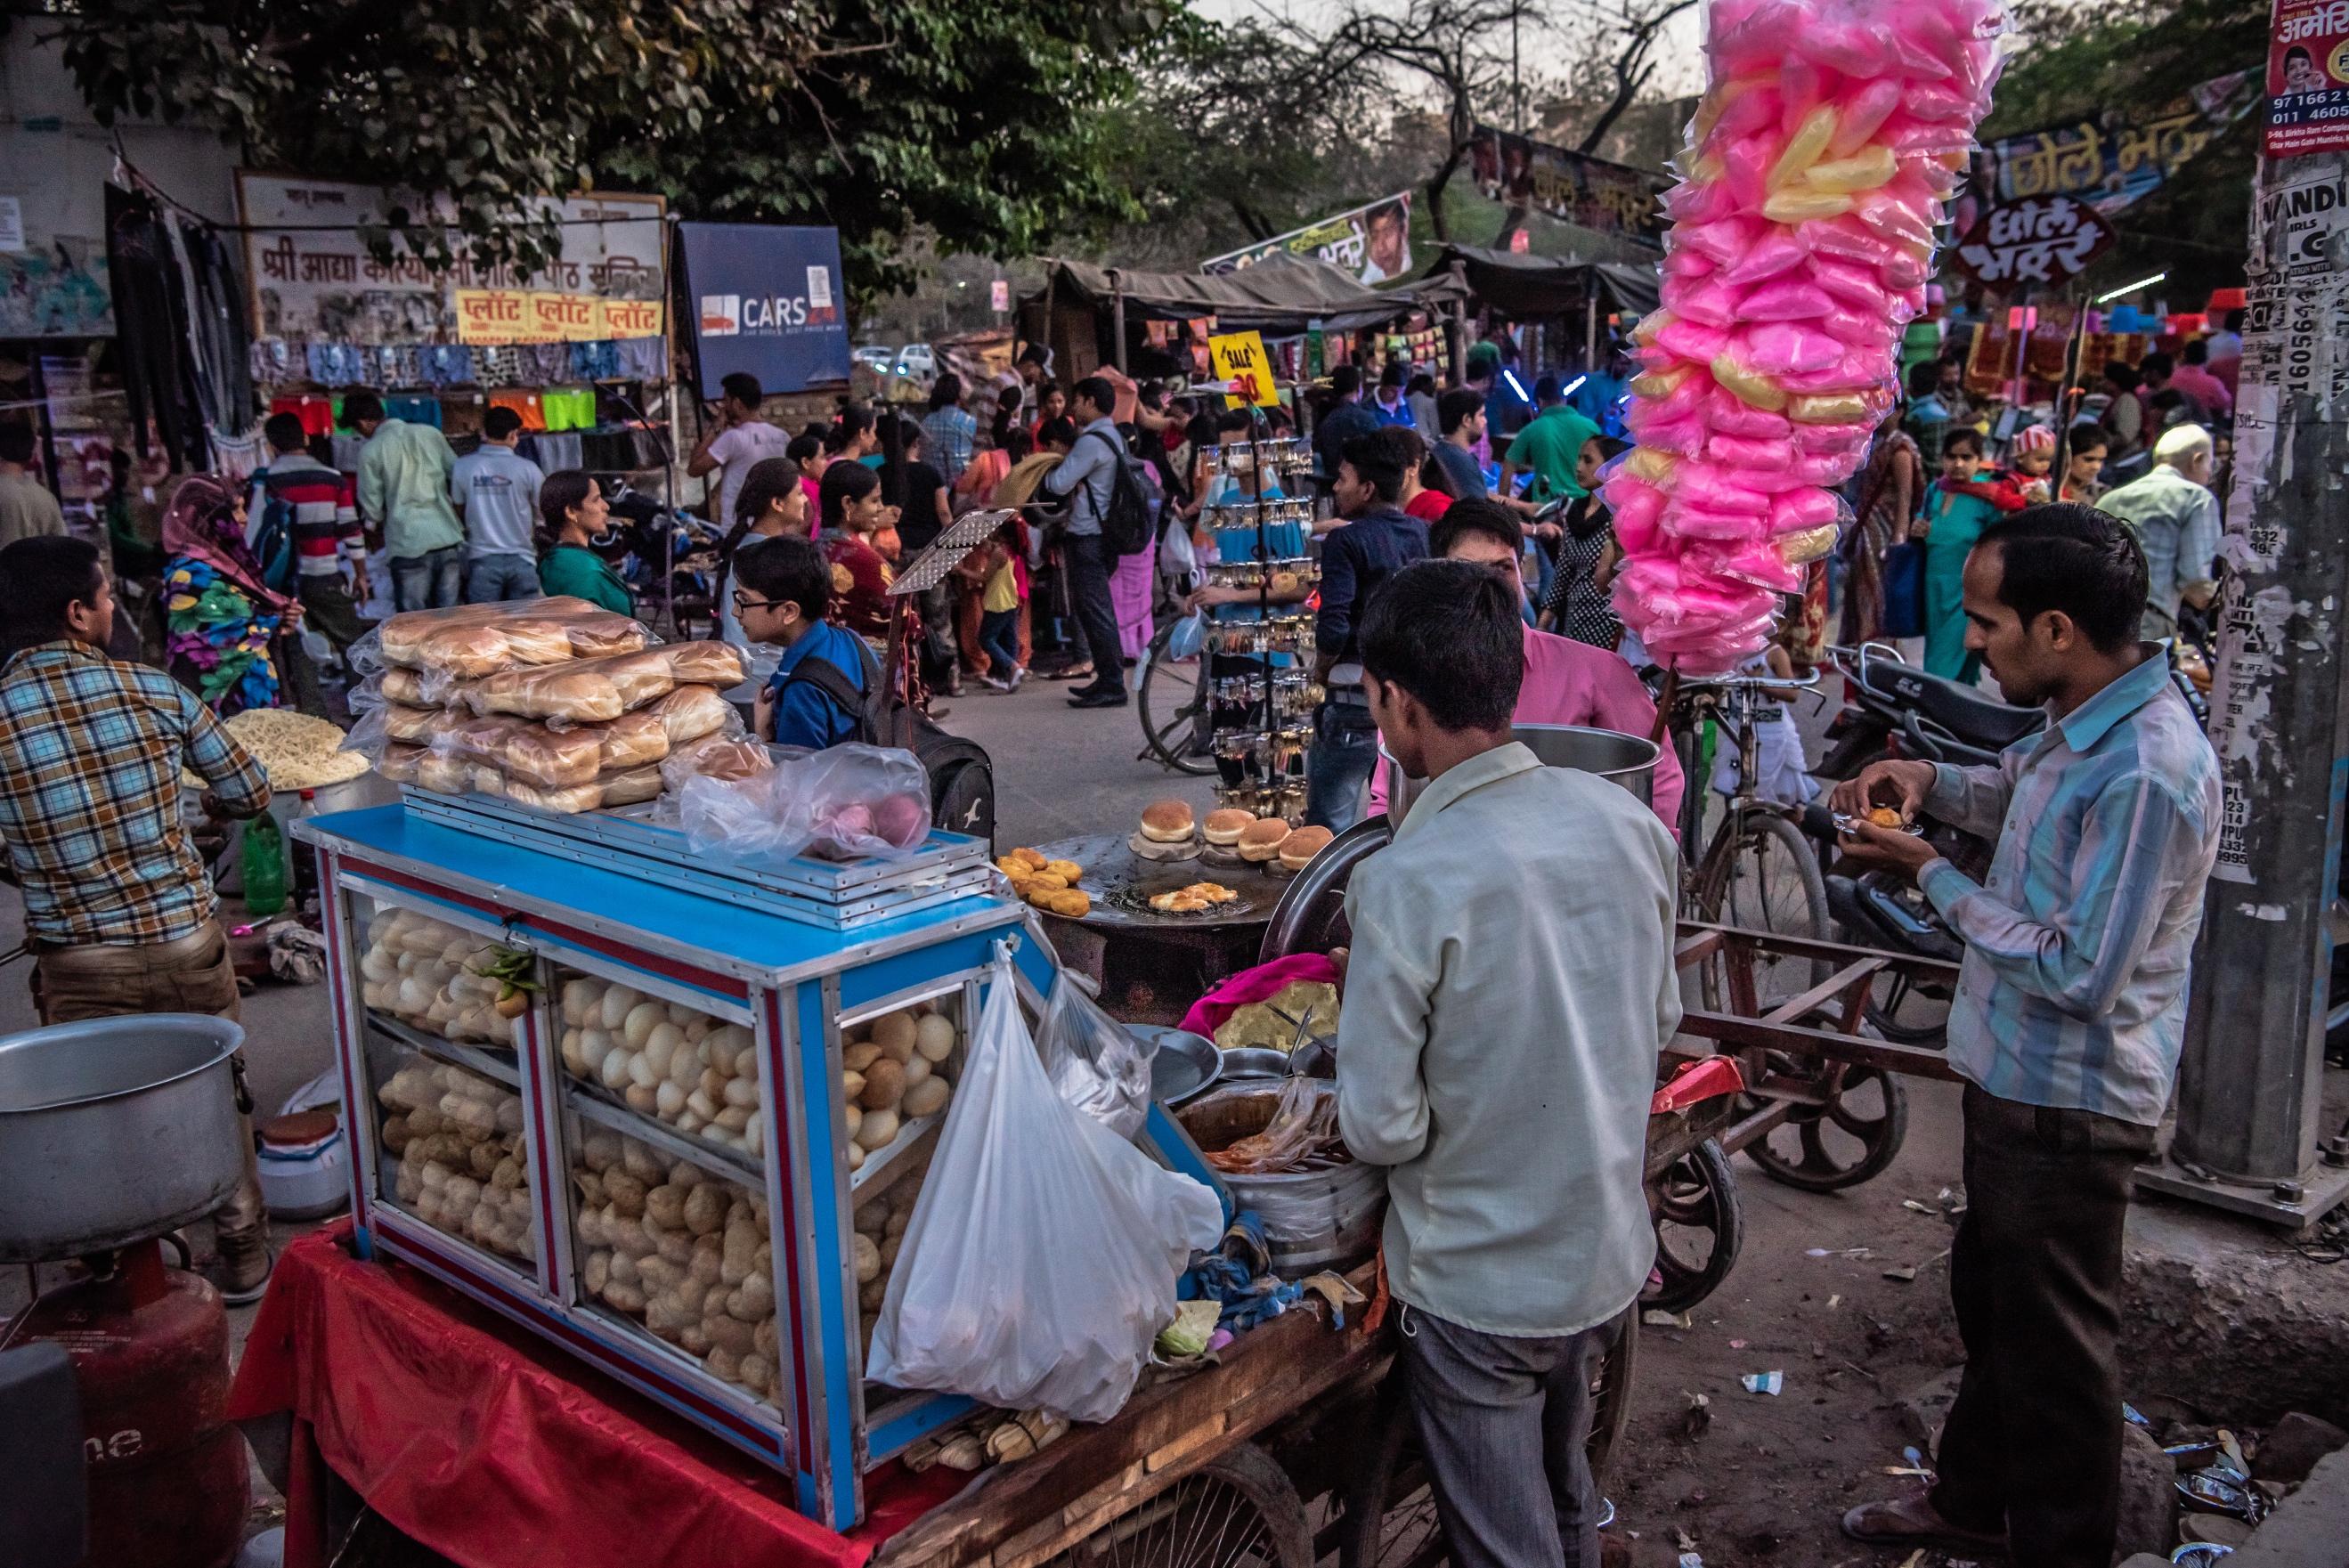 A chaat seller in a weekly market in Delhi. Credit: Rashmi Choudhary